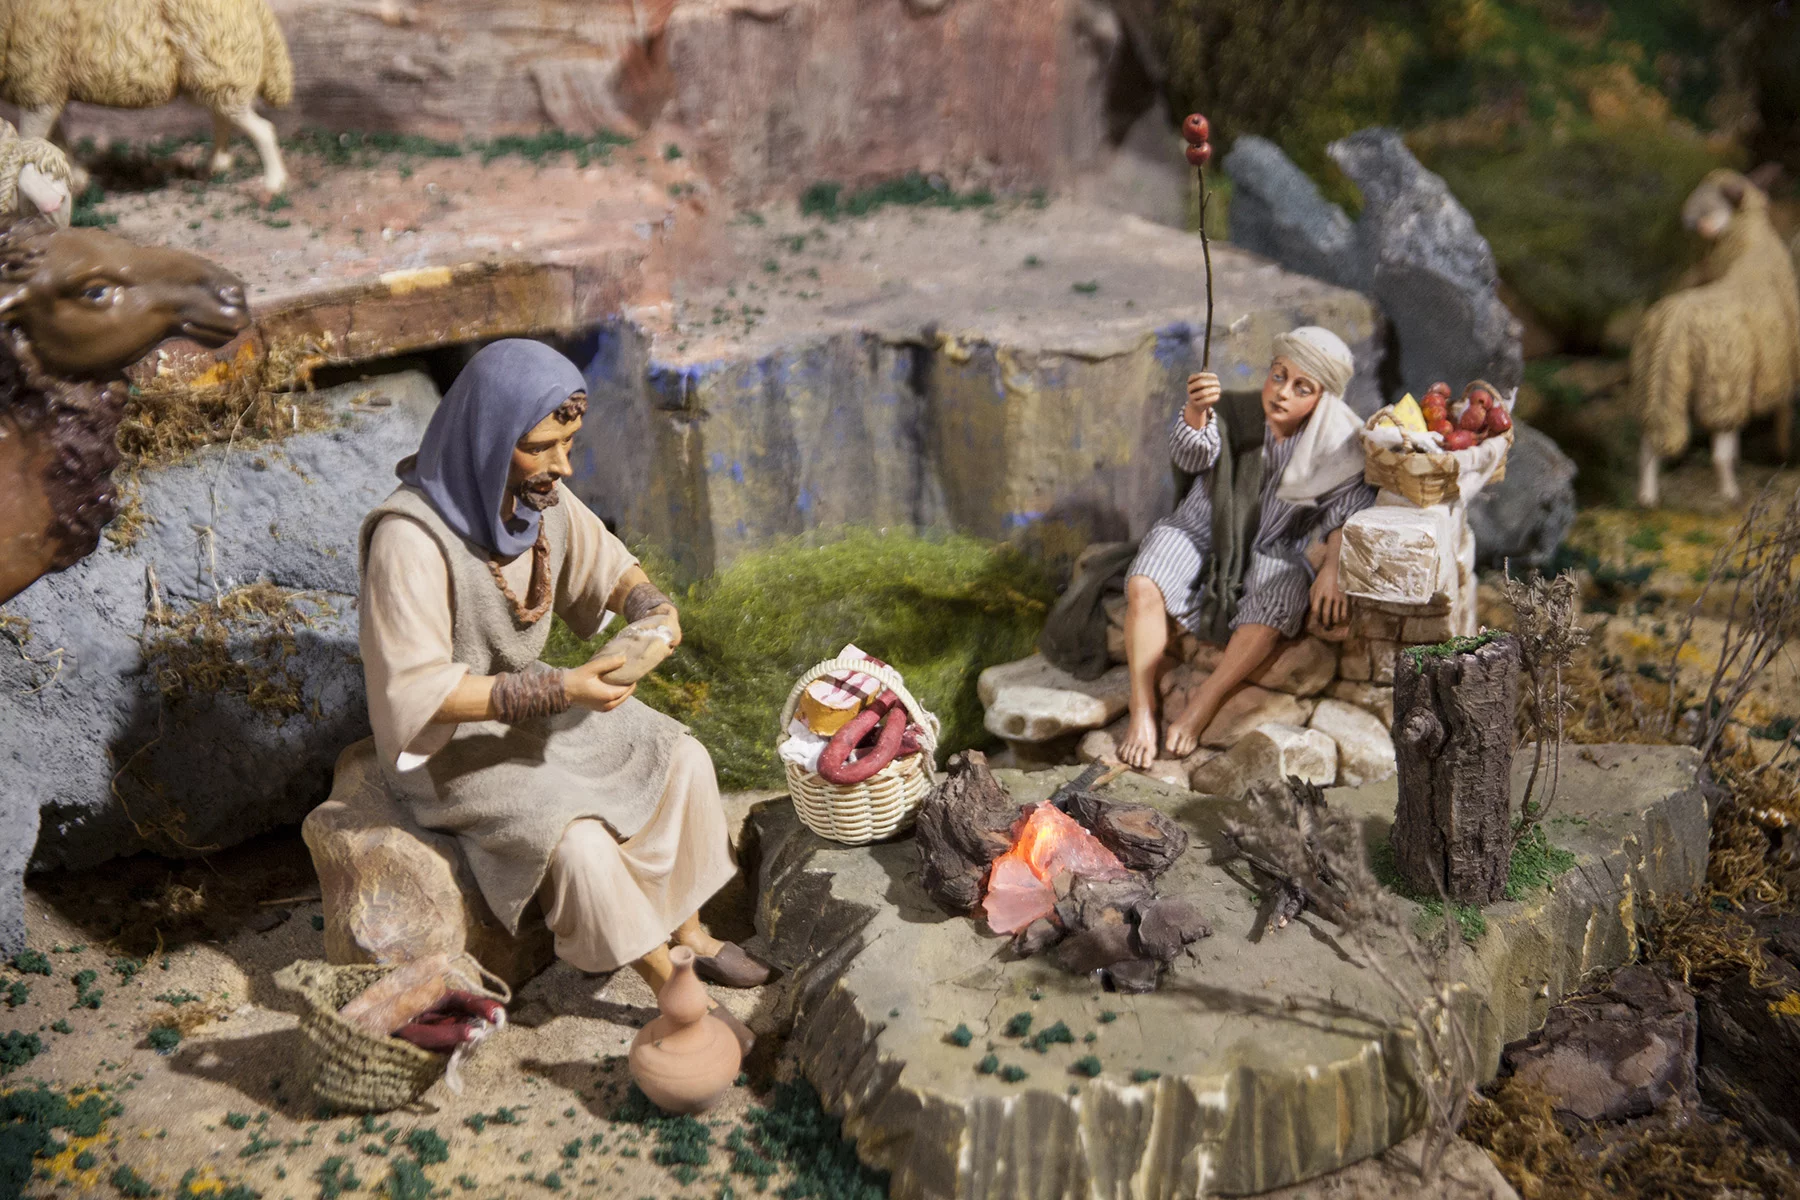 Nativity scene on display during the Christmas season in Madrid, Spain